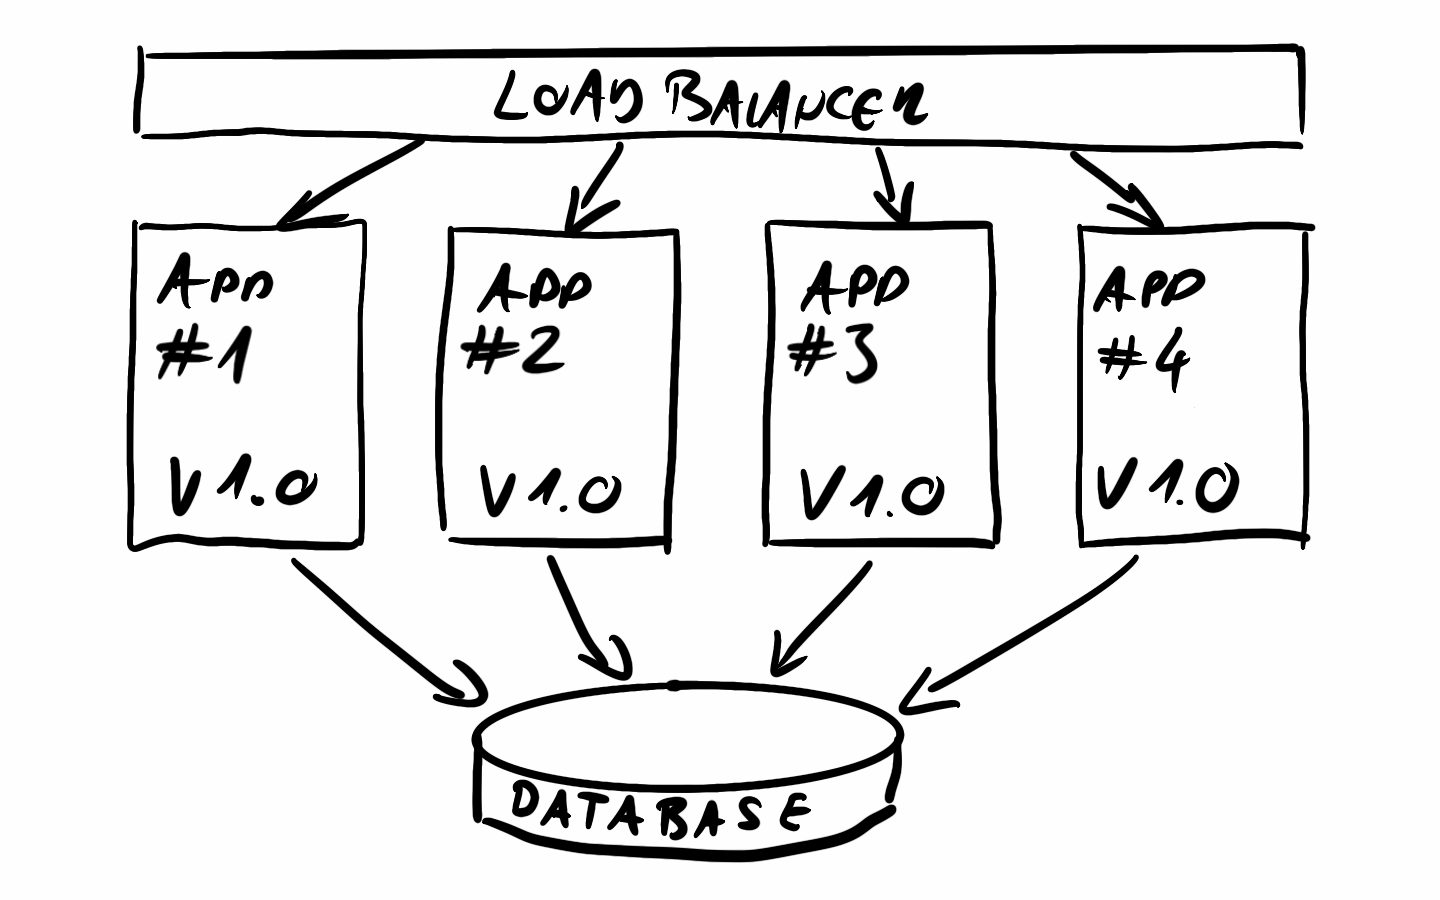 Altering SQL database schemas in production